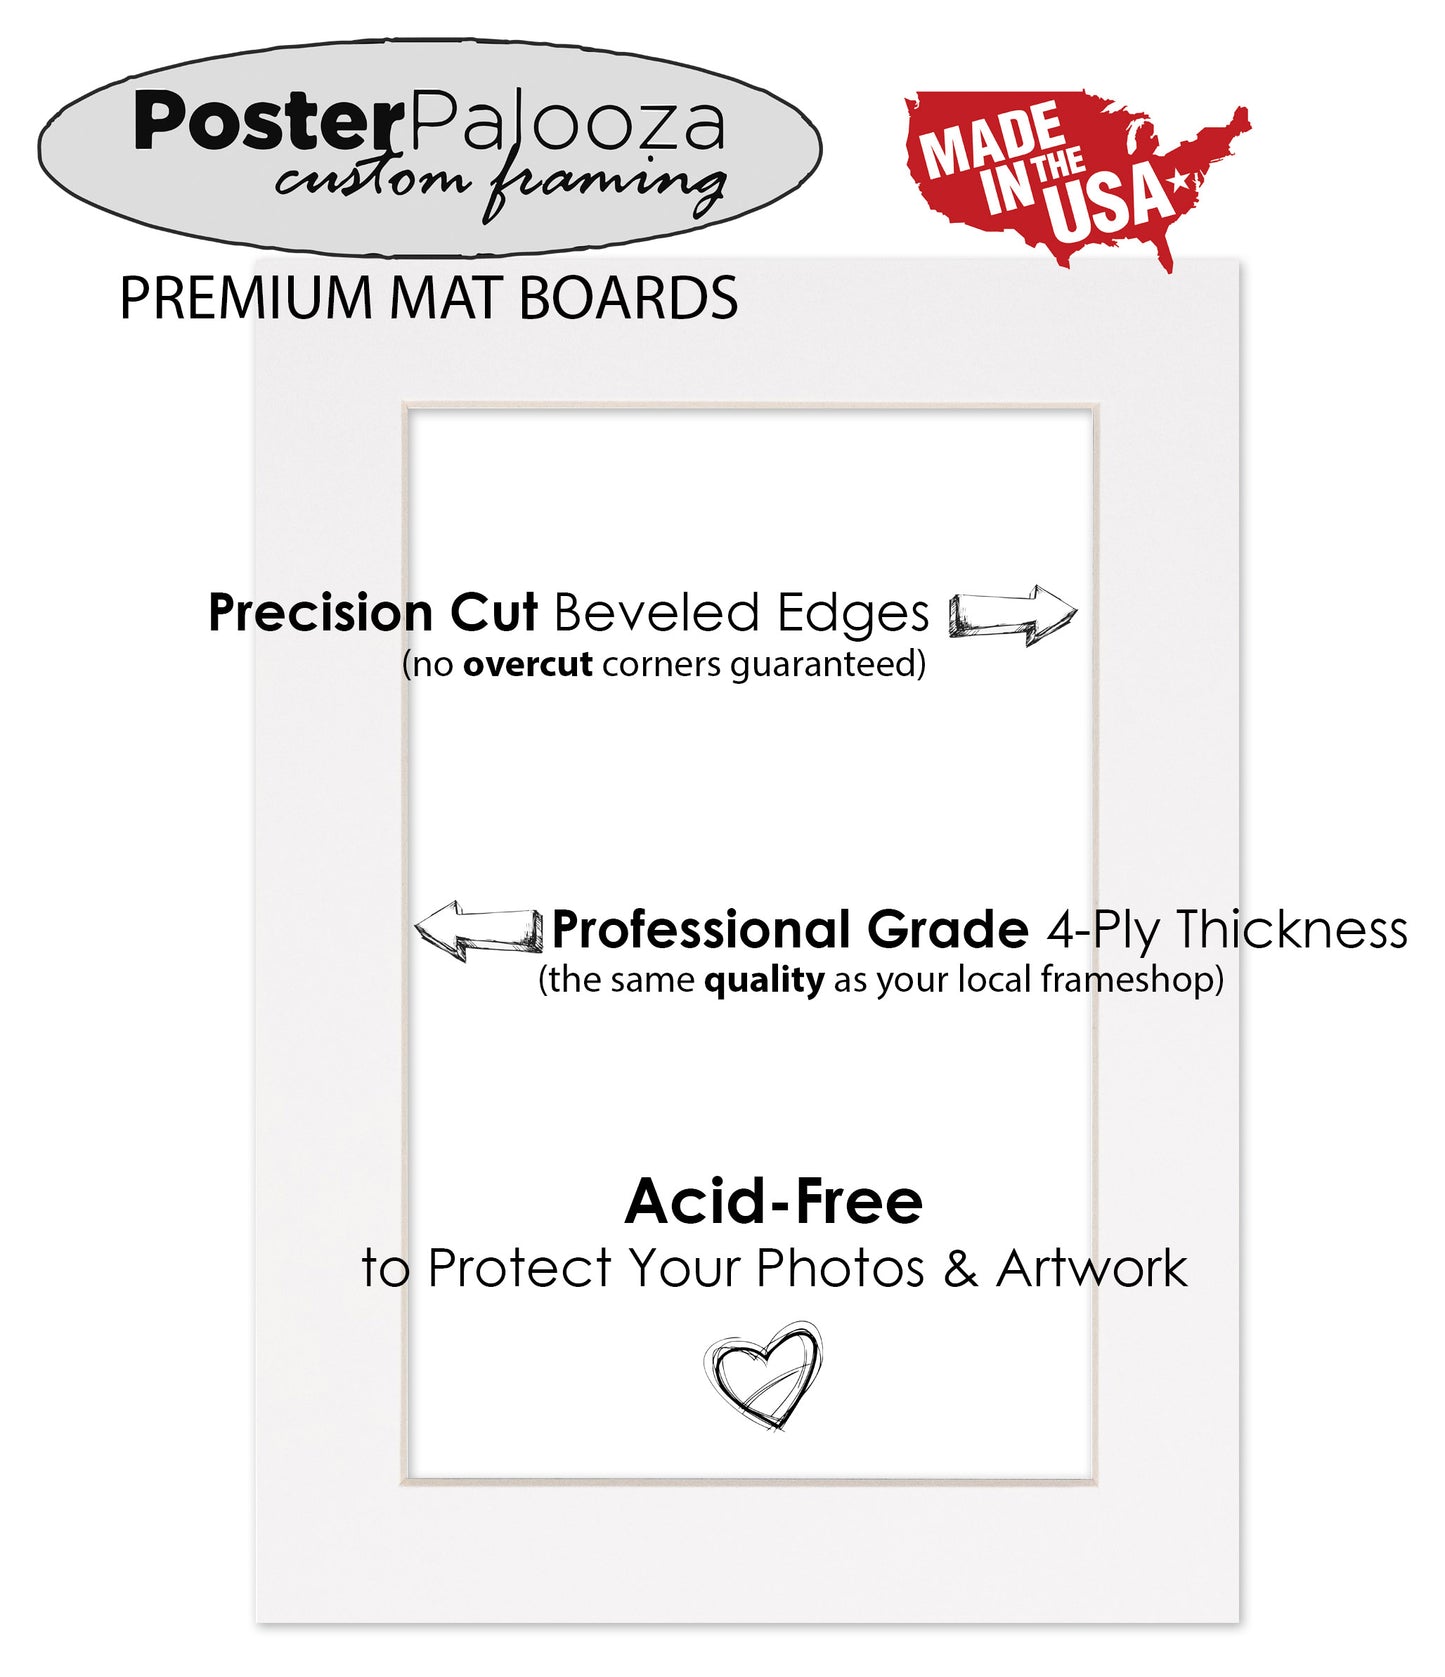 Pack of 25 Yellow Precut Acid-Free Matboards